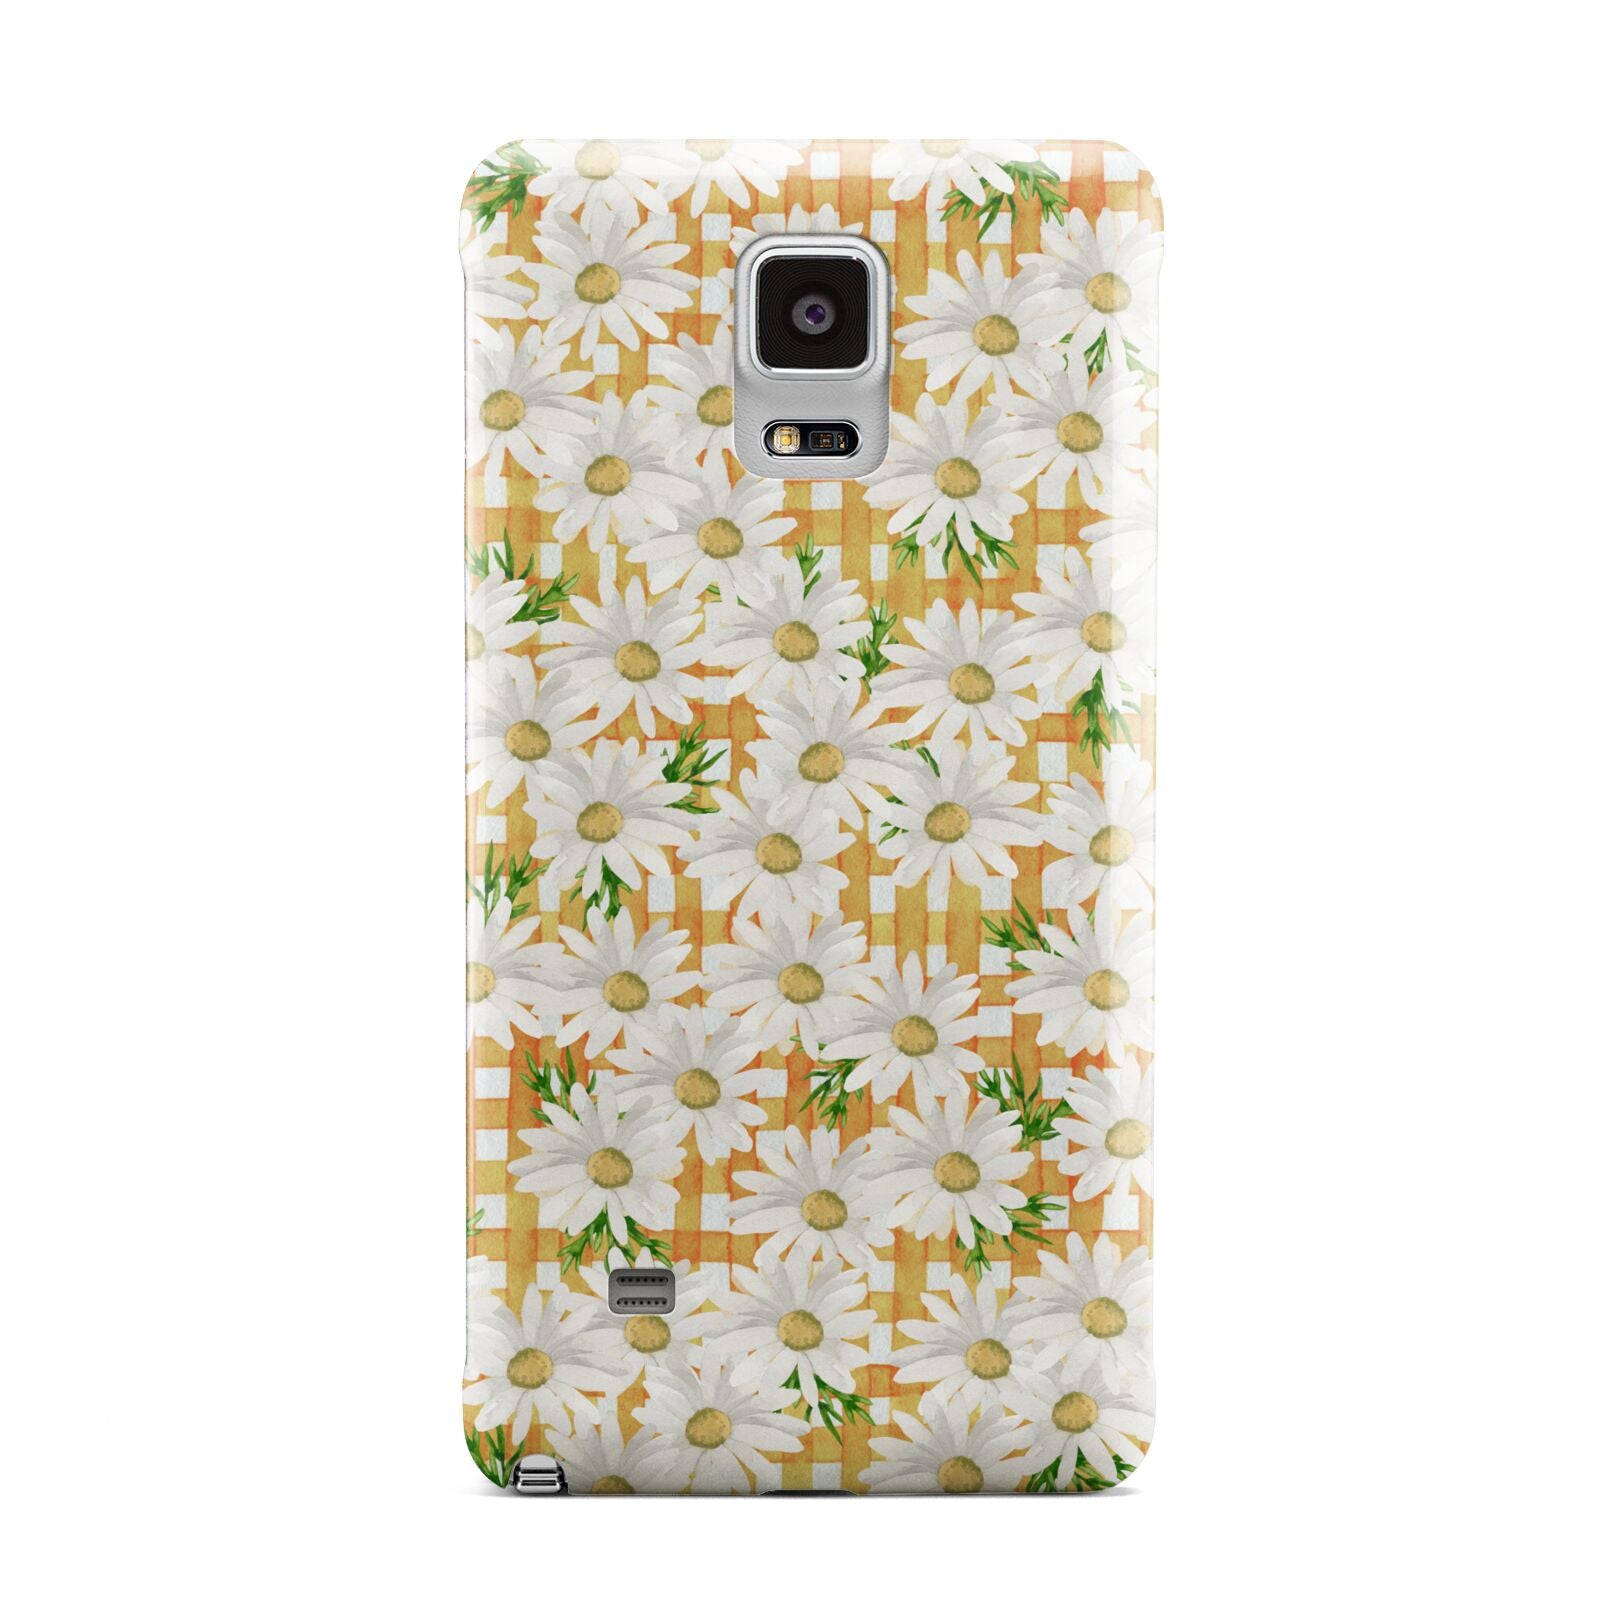 Checkered Daisy Samsung Galaxy Note 4 Case